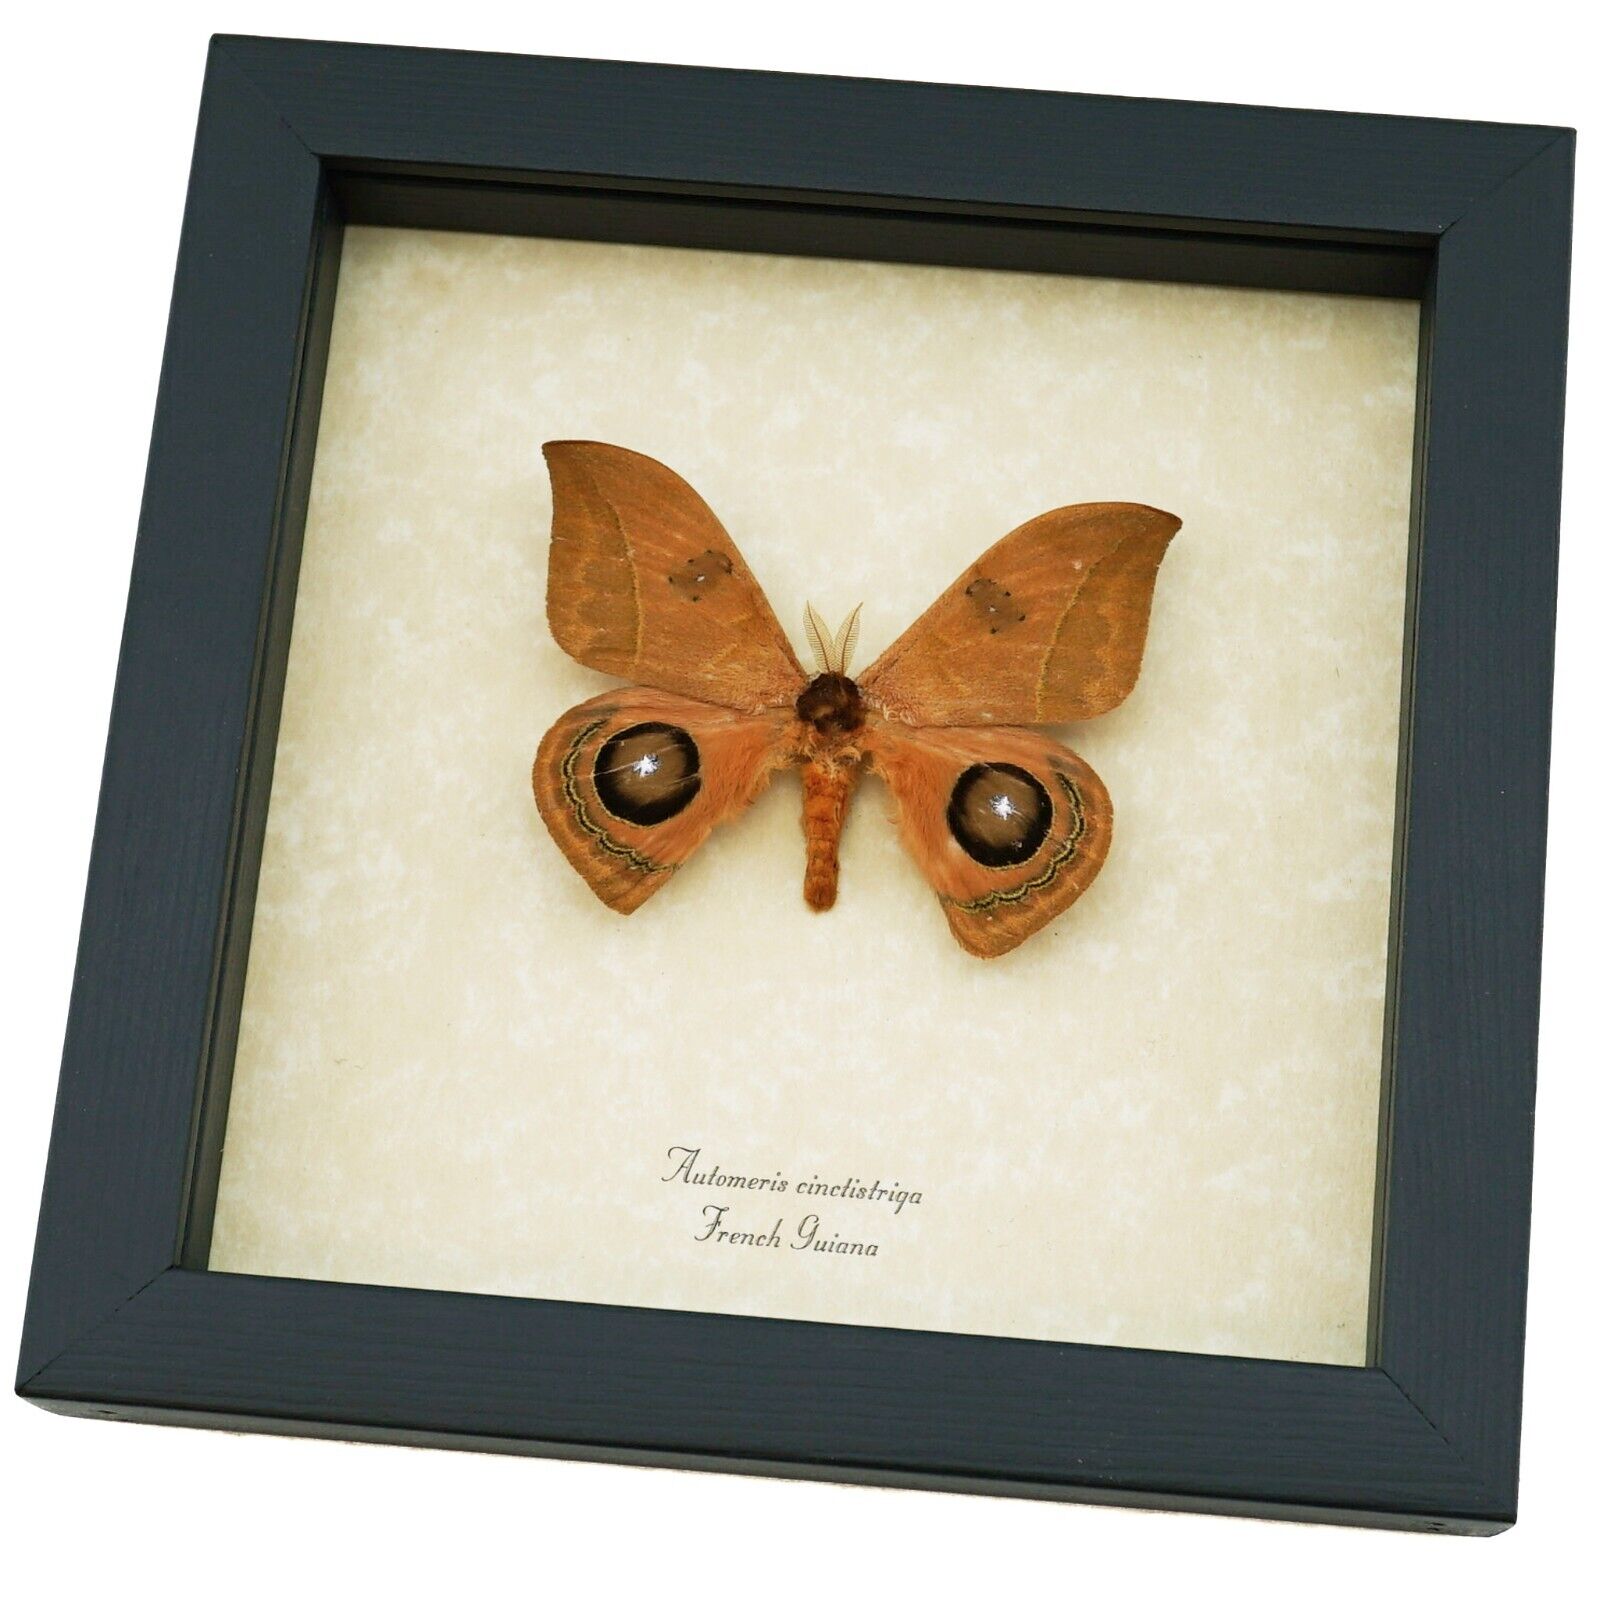 Automeris cinctistriga Rare Silkmoth Moth Saturniidae Framed Taxidermy Display